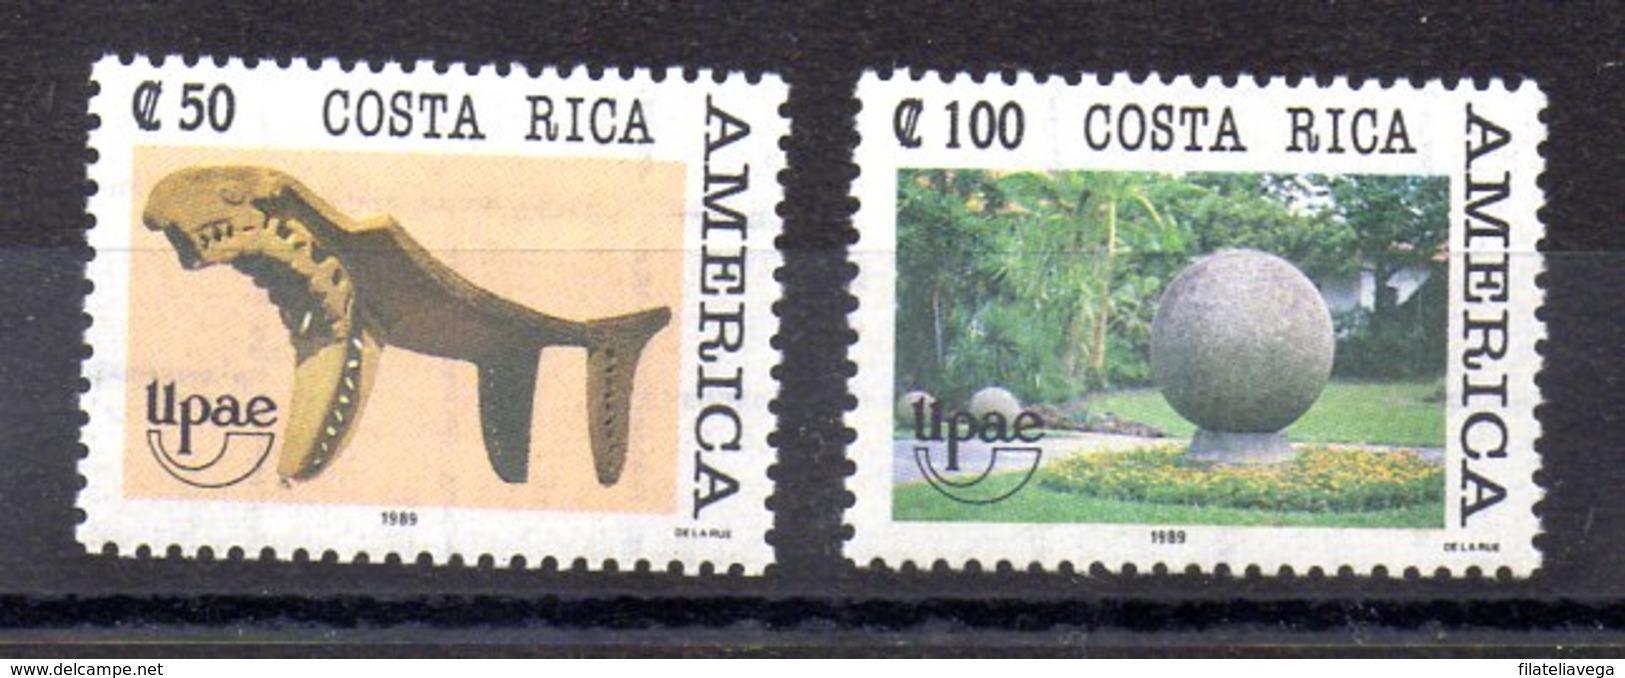 Serie De Costa Rica Nº Yvert 518/19 ** UPAE - Costa Rica